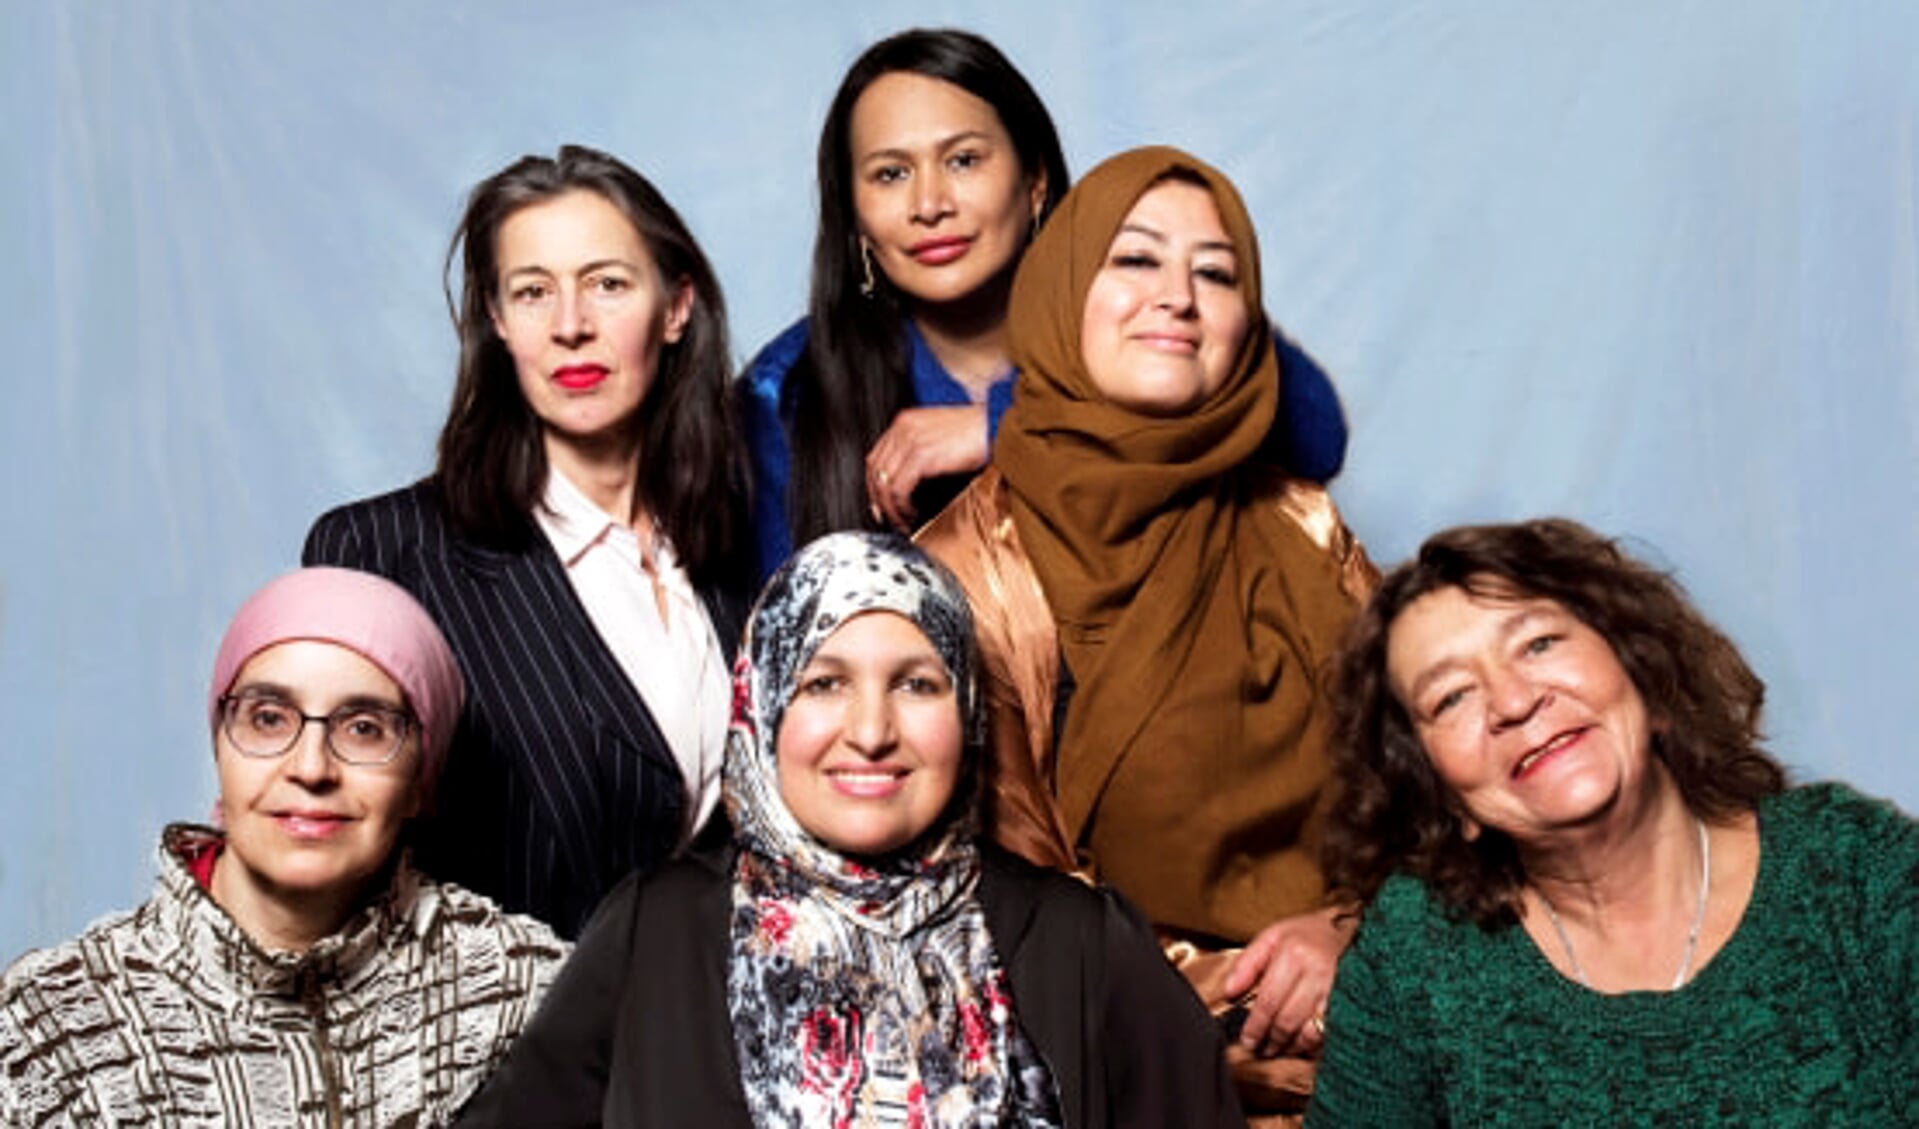 V.l.n.r.: Zainab, Adelheid, Darifa, Dinah, Nora en Meikina.